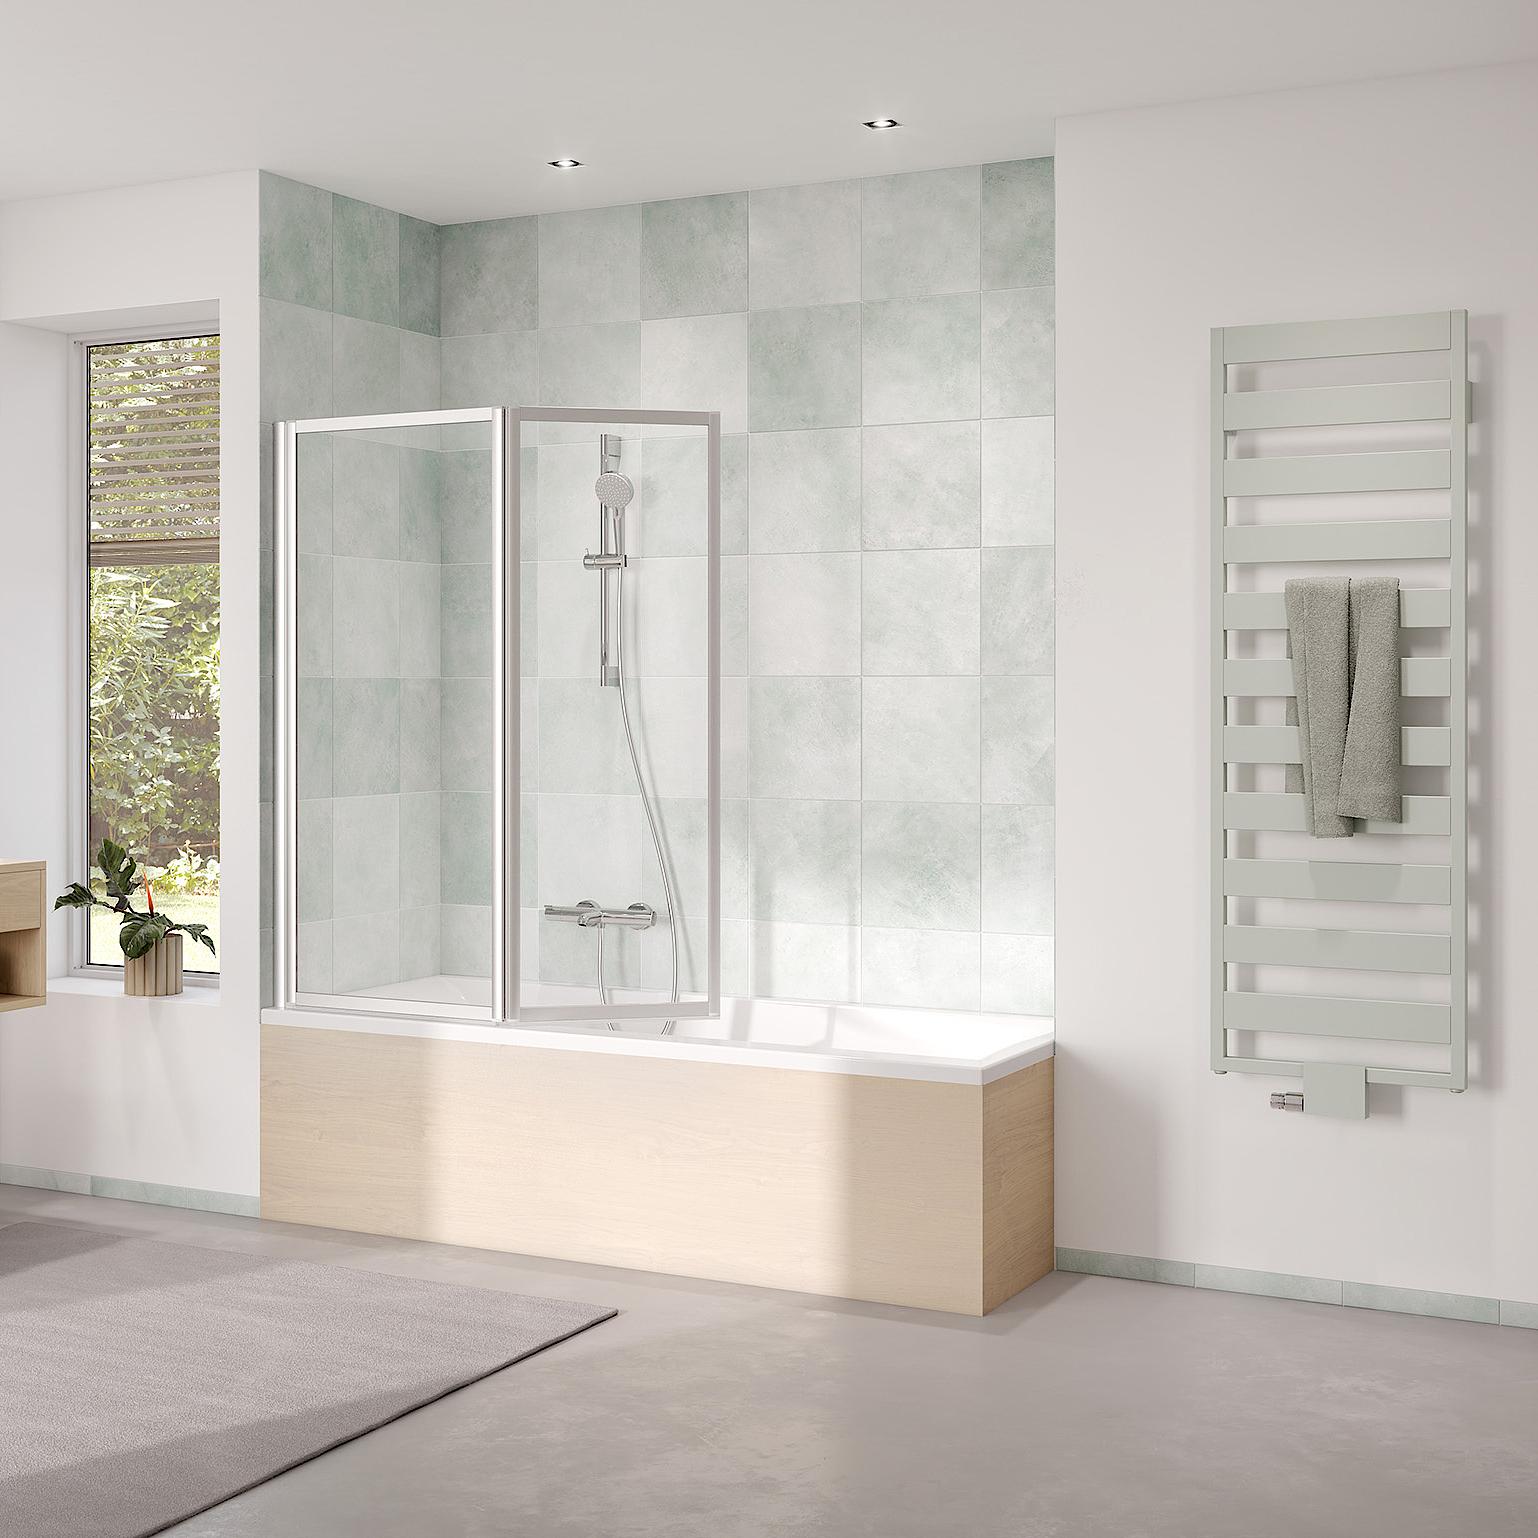 Kermi shower enclosure for bathtub VARIO 2000 two panel folding screen on bathtub